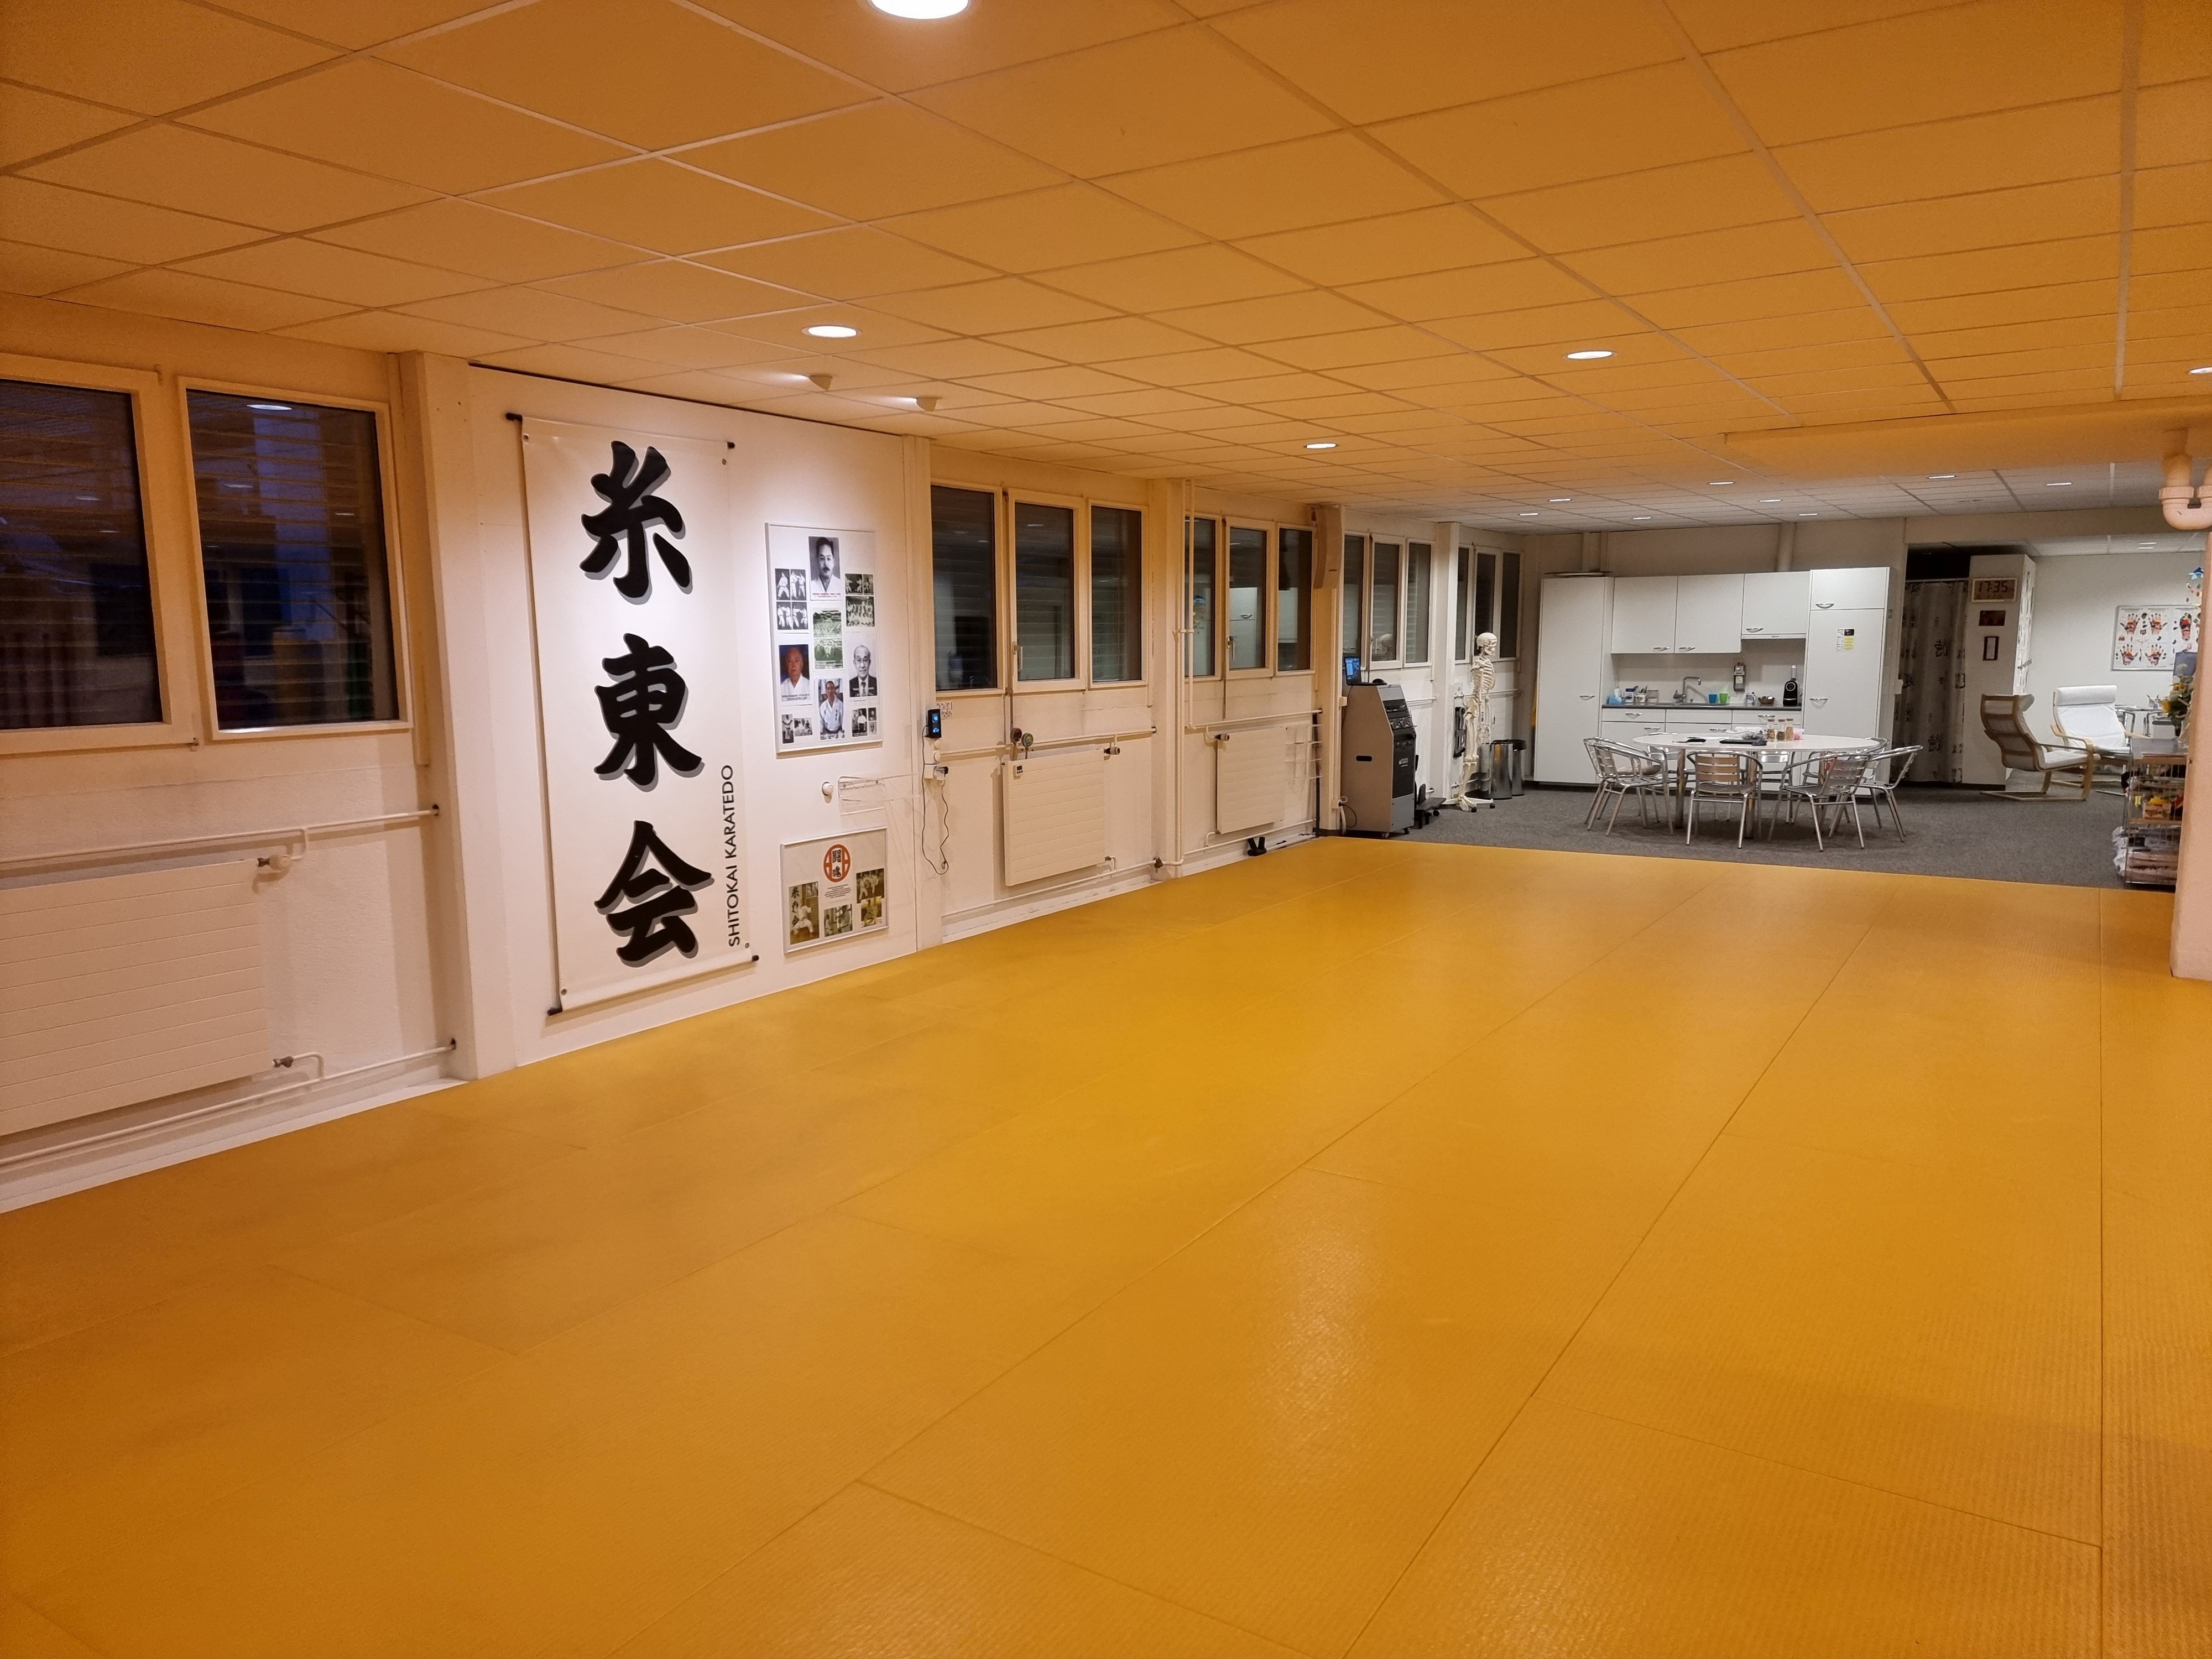 Bilder Shitokai Karateschule